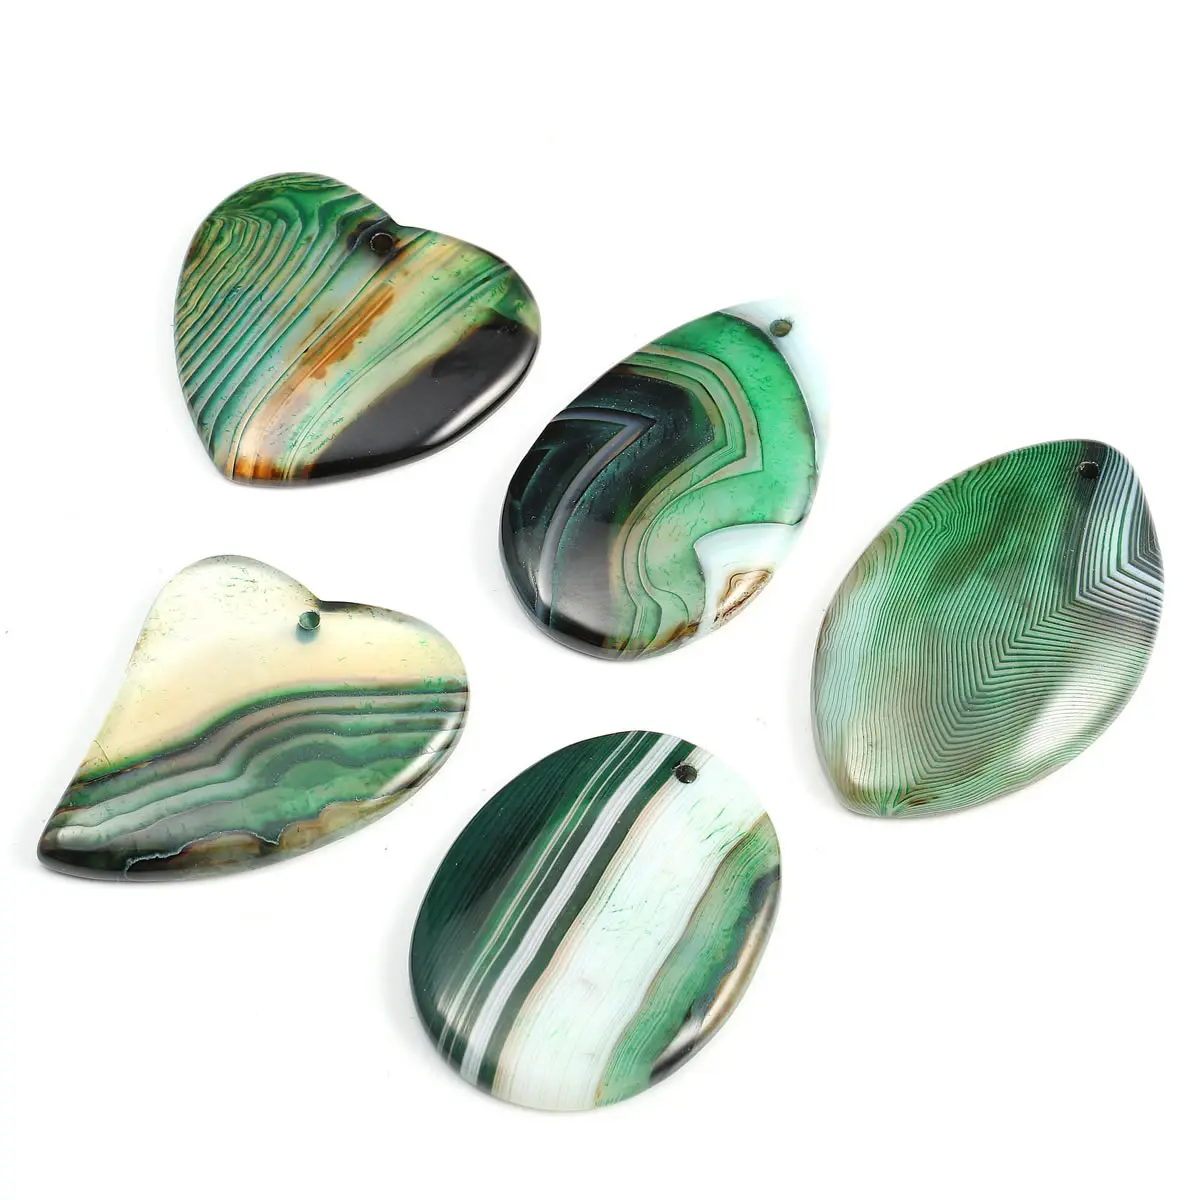 

5pcs / Lot Green Striped Agates Pendant Reiki Healing Natural Stone Meditation Amulet DIY Jewelry Natural Stone Charms